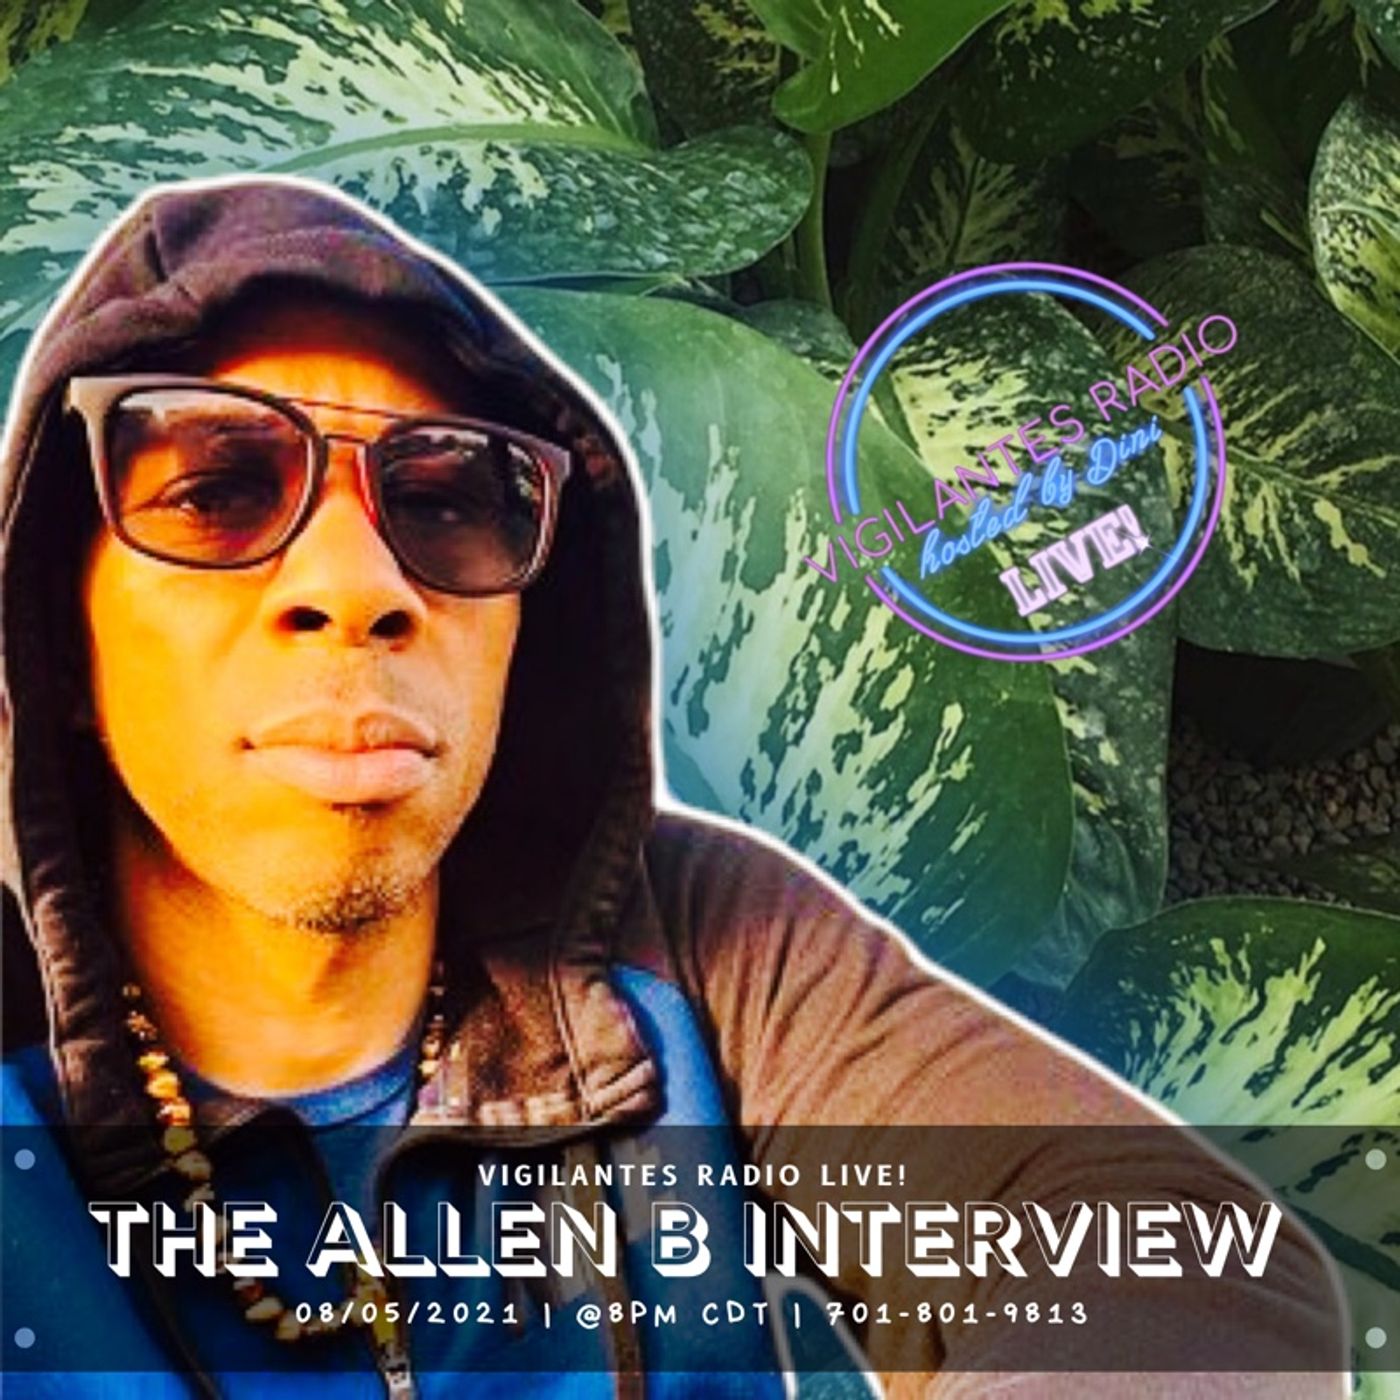 The Allen B Interview. Image